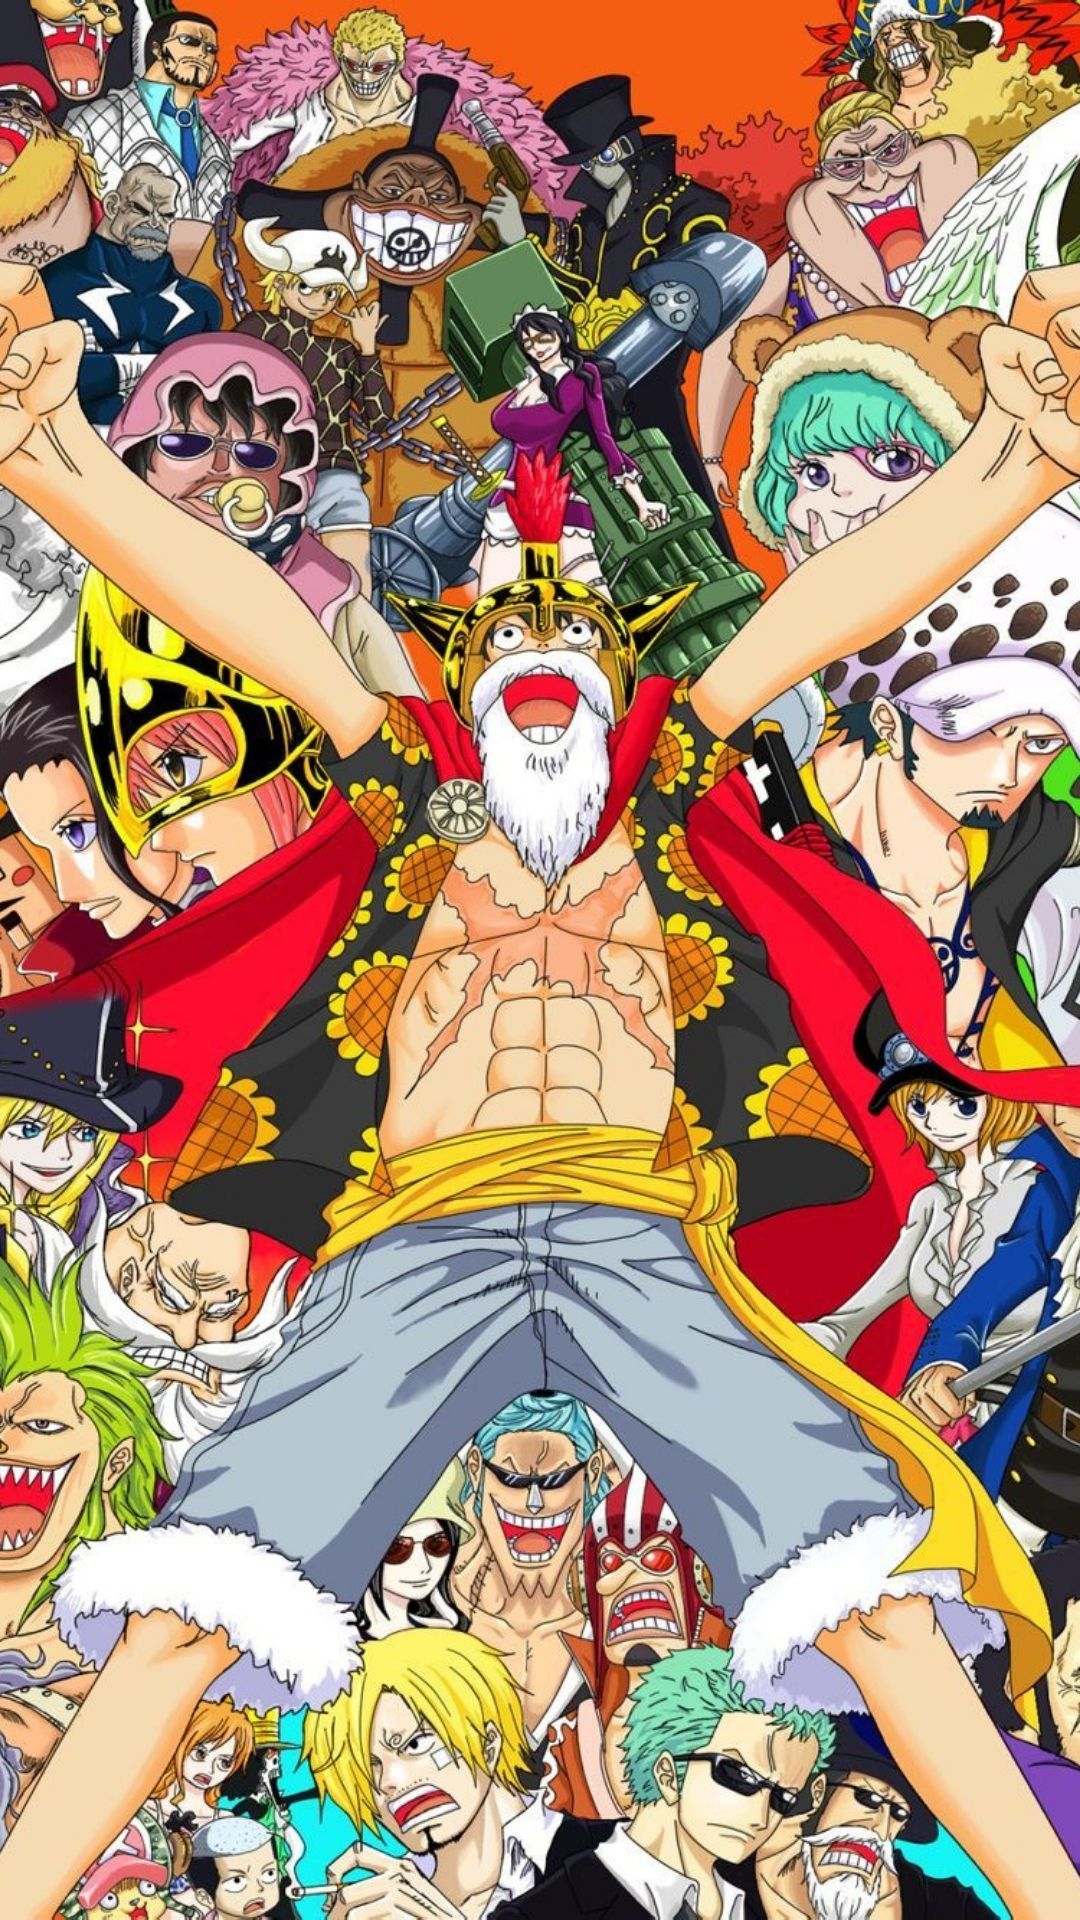 One Piece Funimation Debuting Season 11 Soon On Bluray